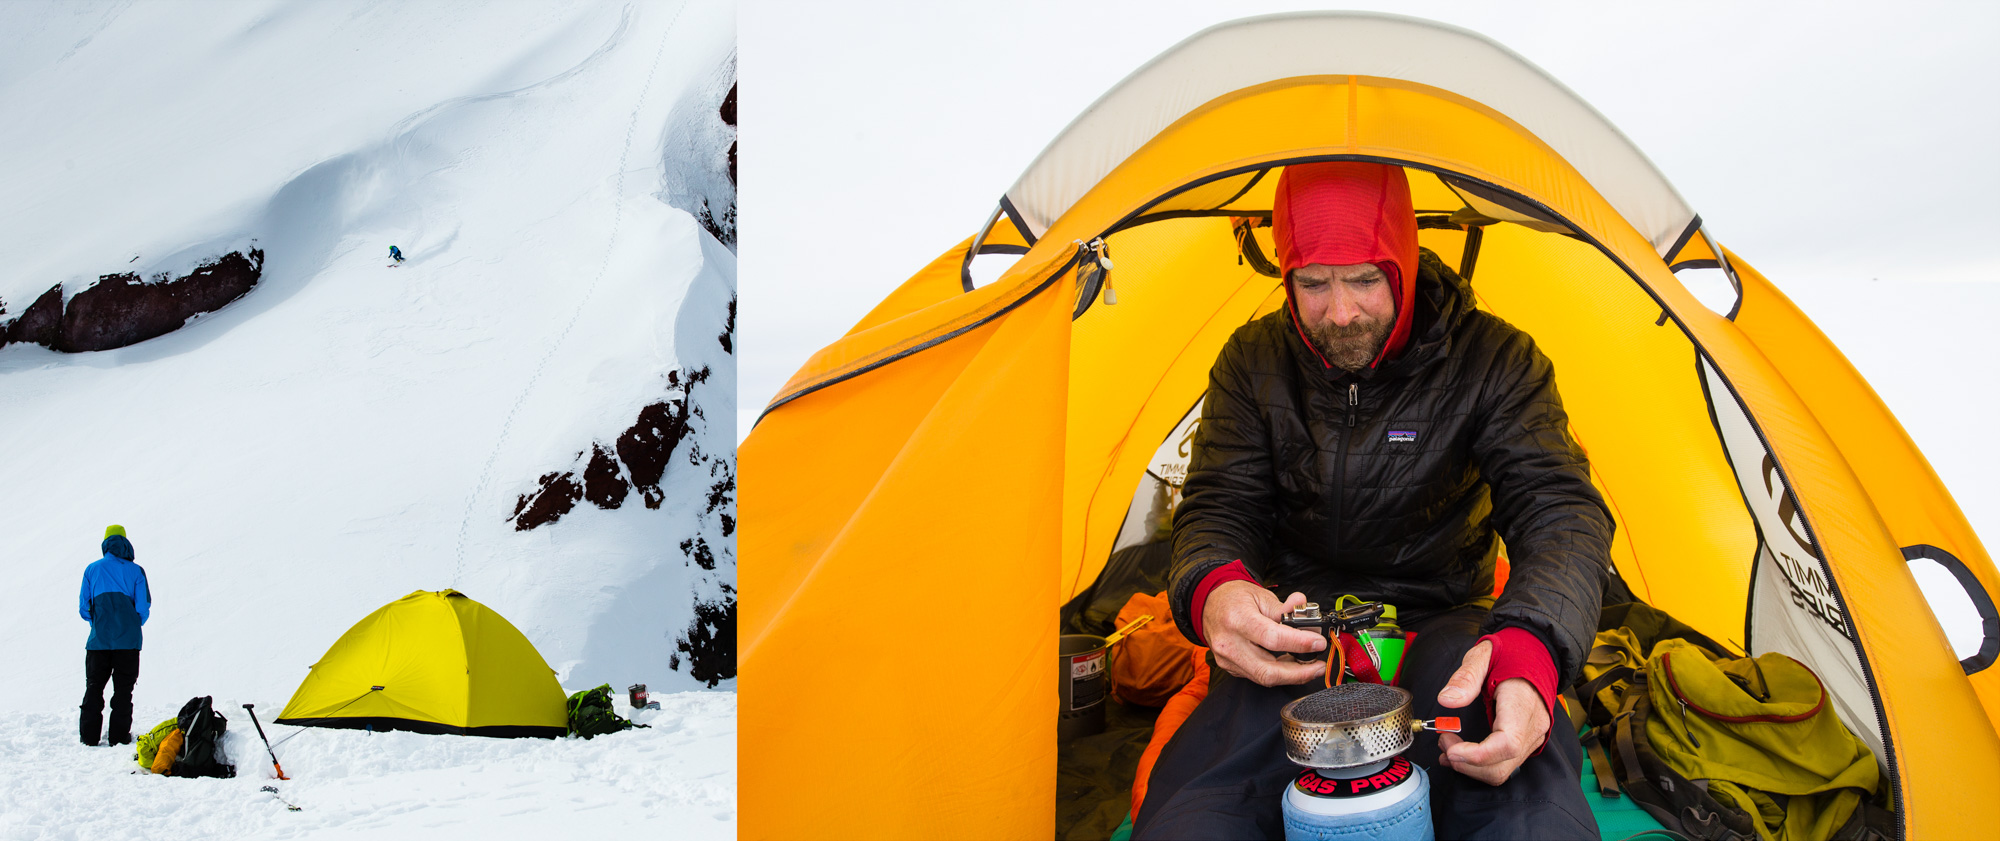 adventure-travel-snow-camp-ski-tent-winter-001